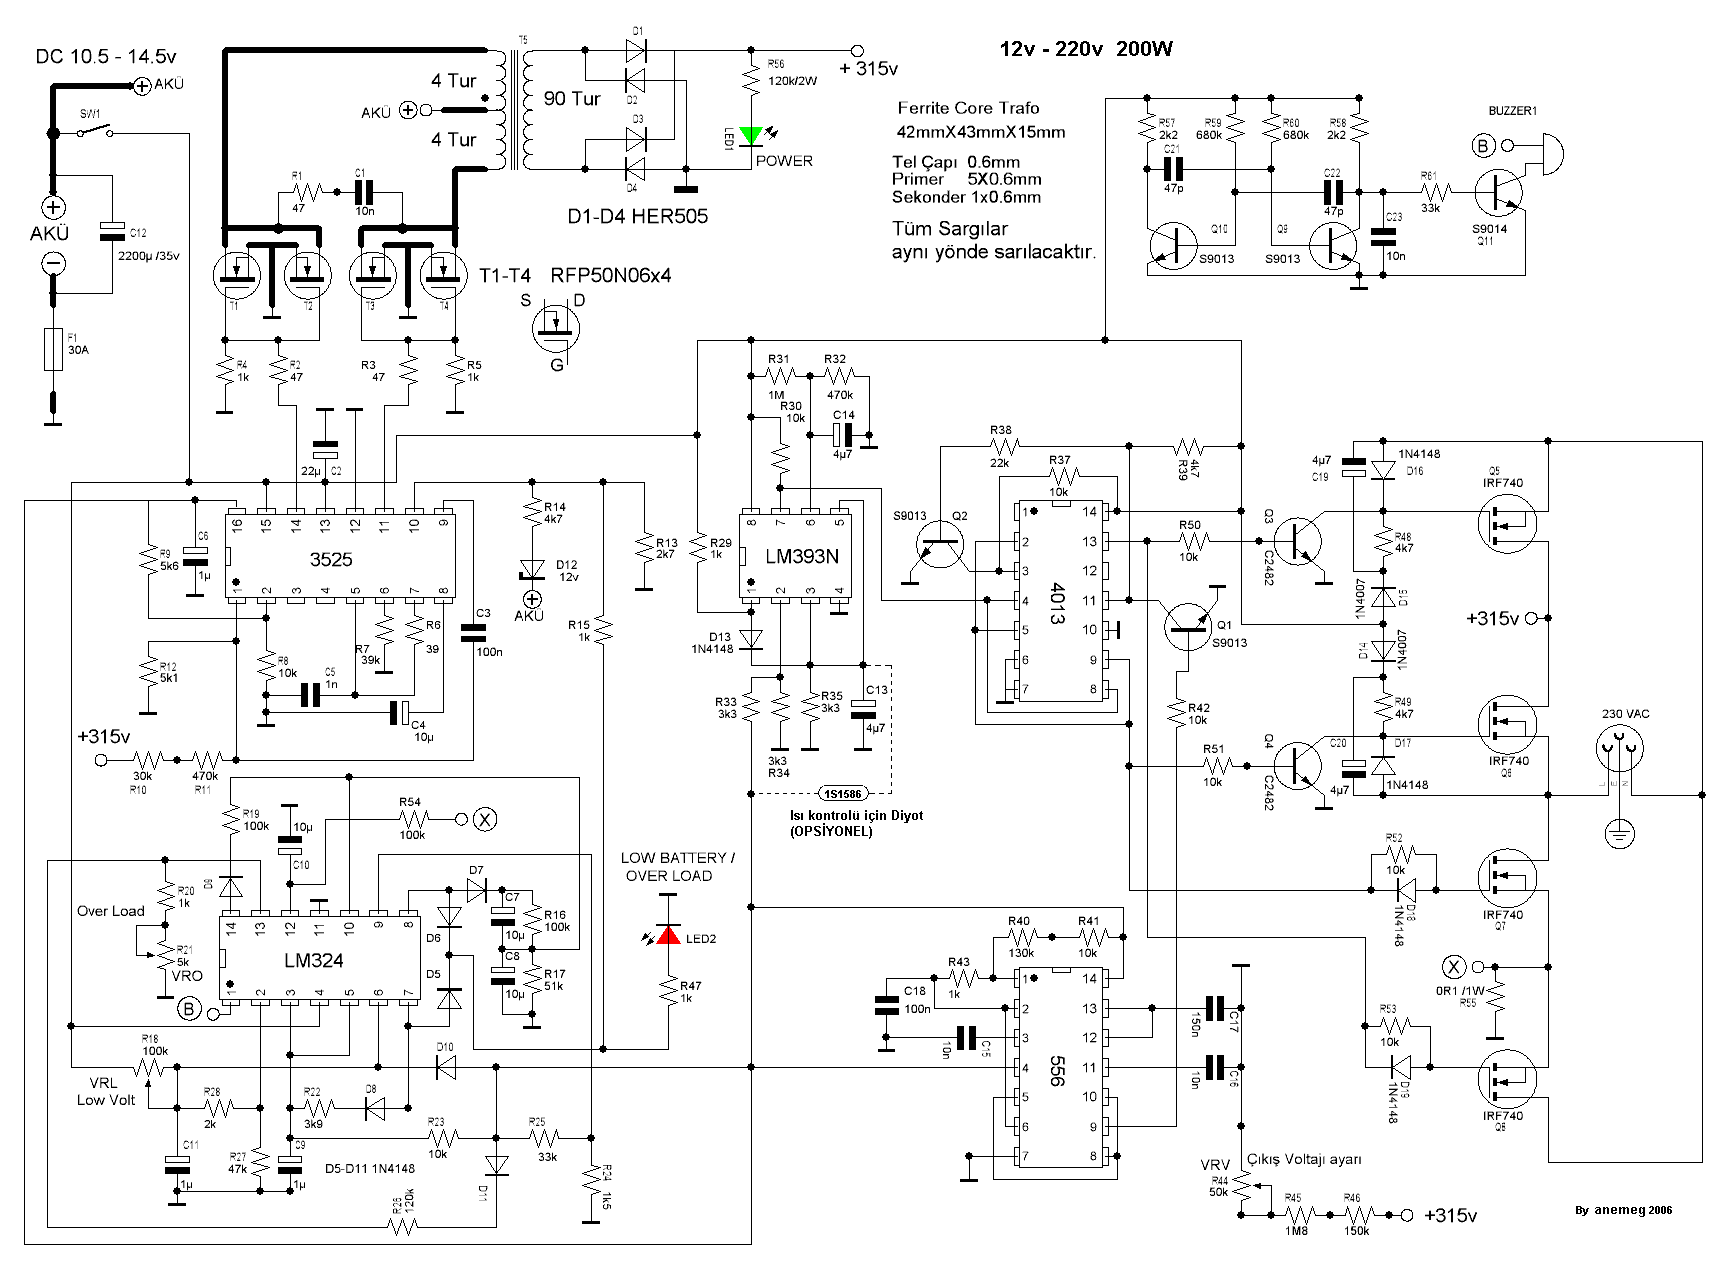   Power inverter schematic diagram / Project